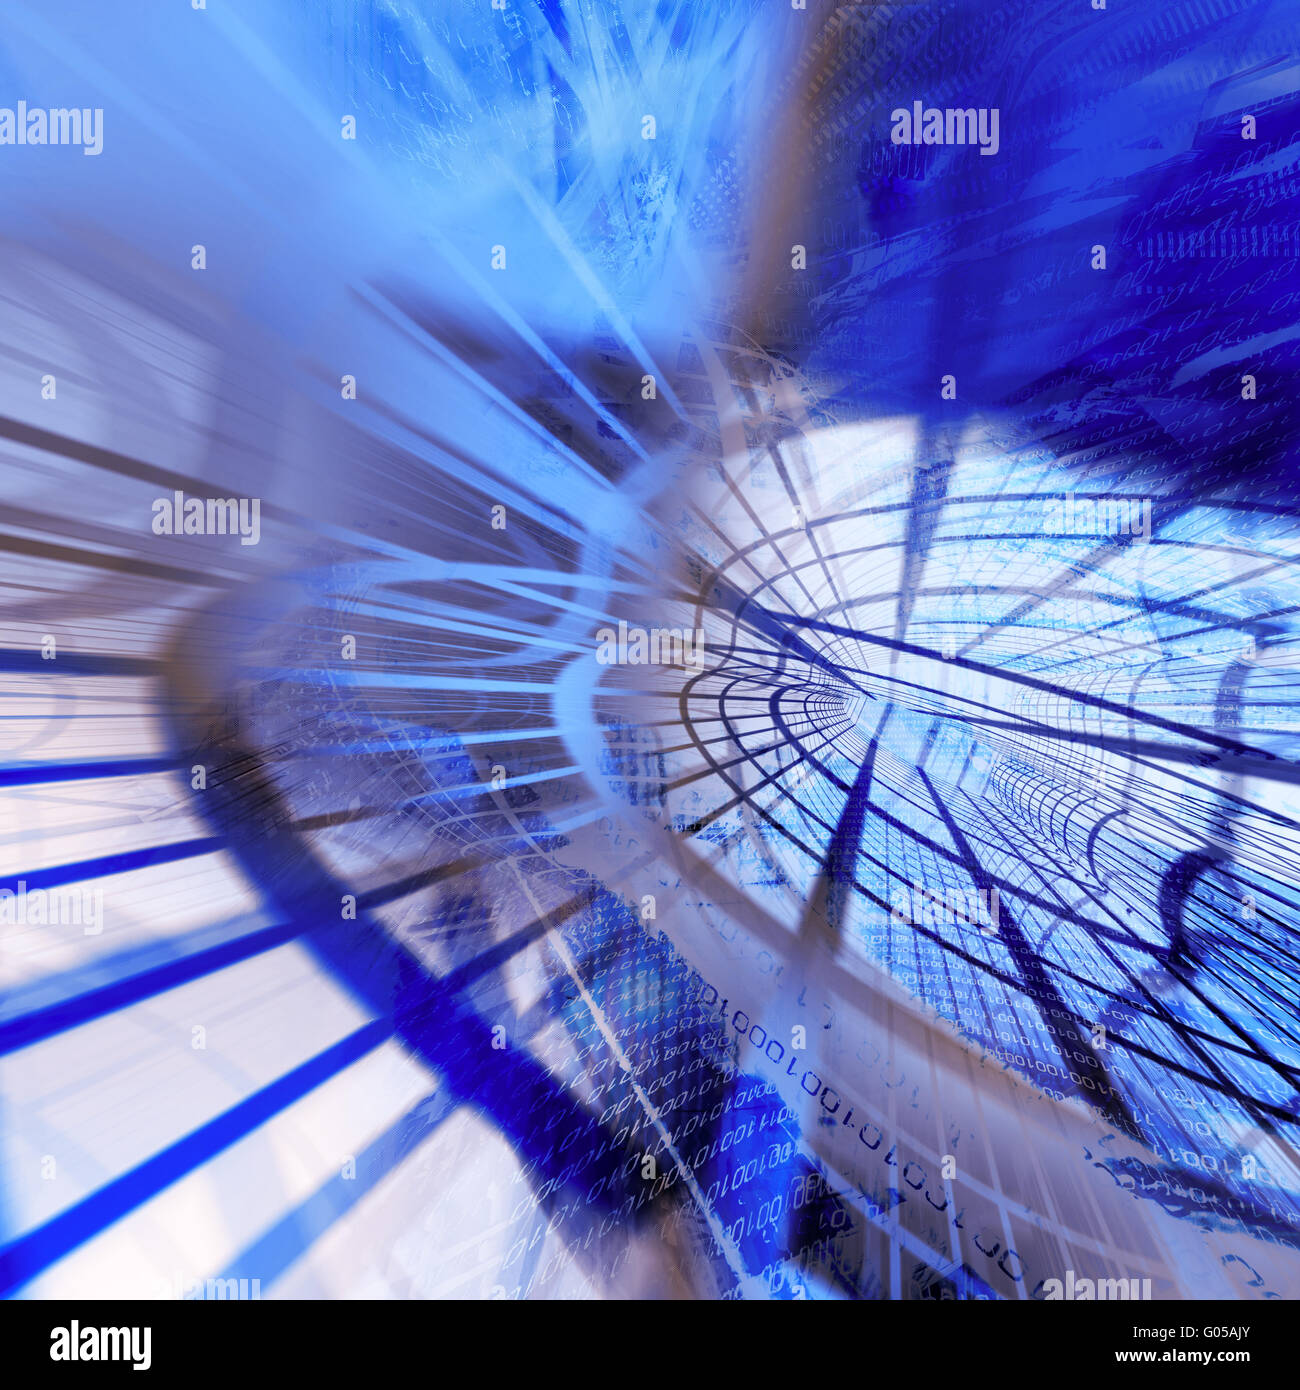 Blue abstract illustration Stock Photo